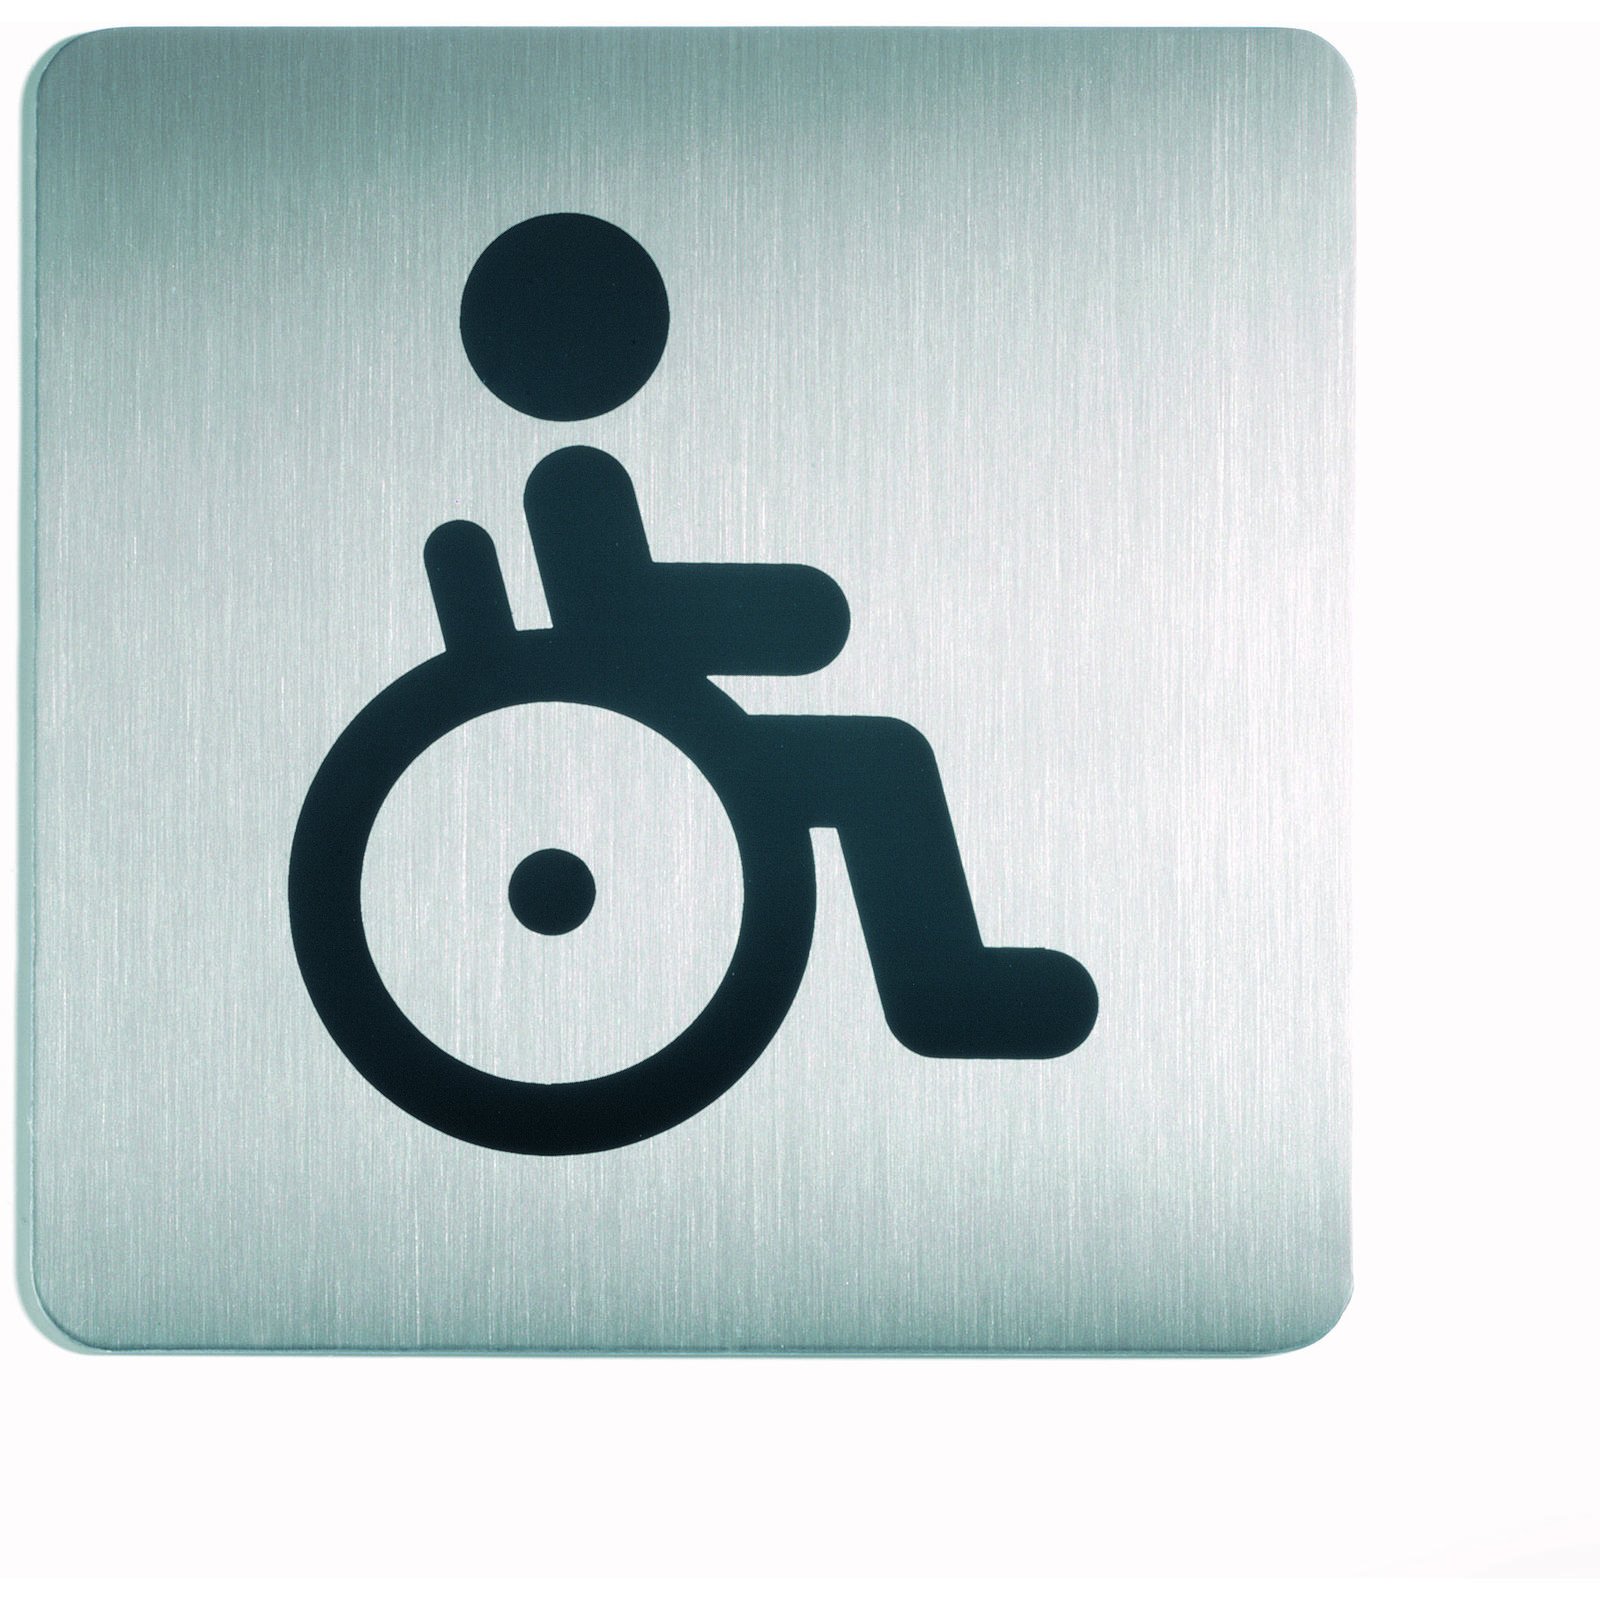 Durable handicap toilet piktogram Handicap toilet